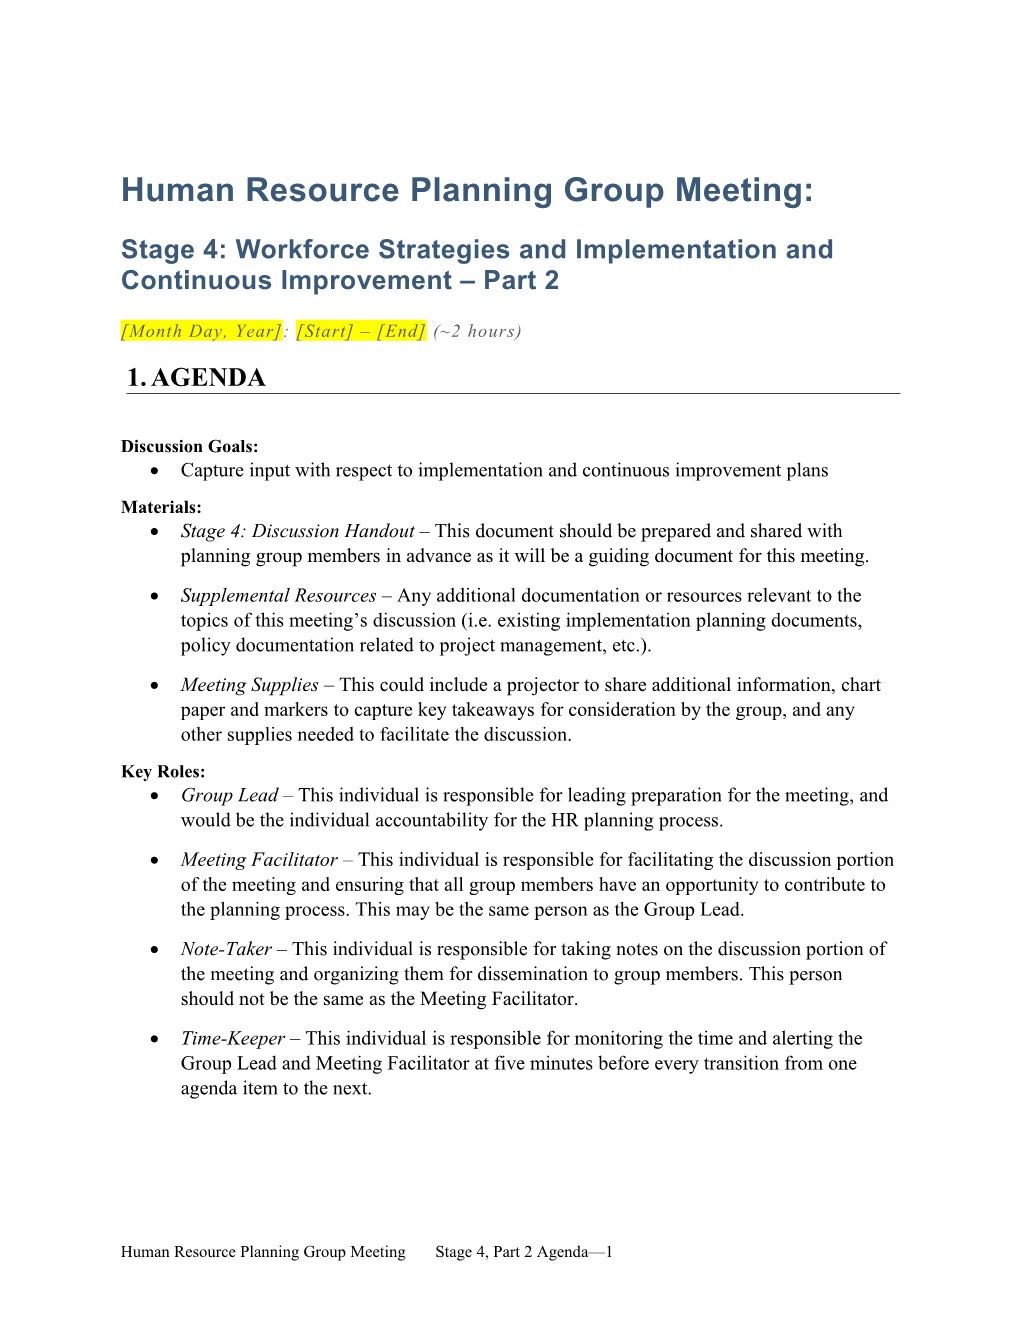 Human Resource Planning Group Meeting